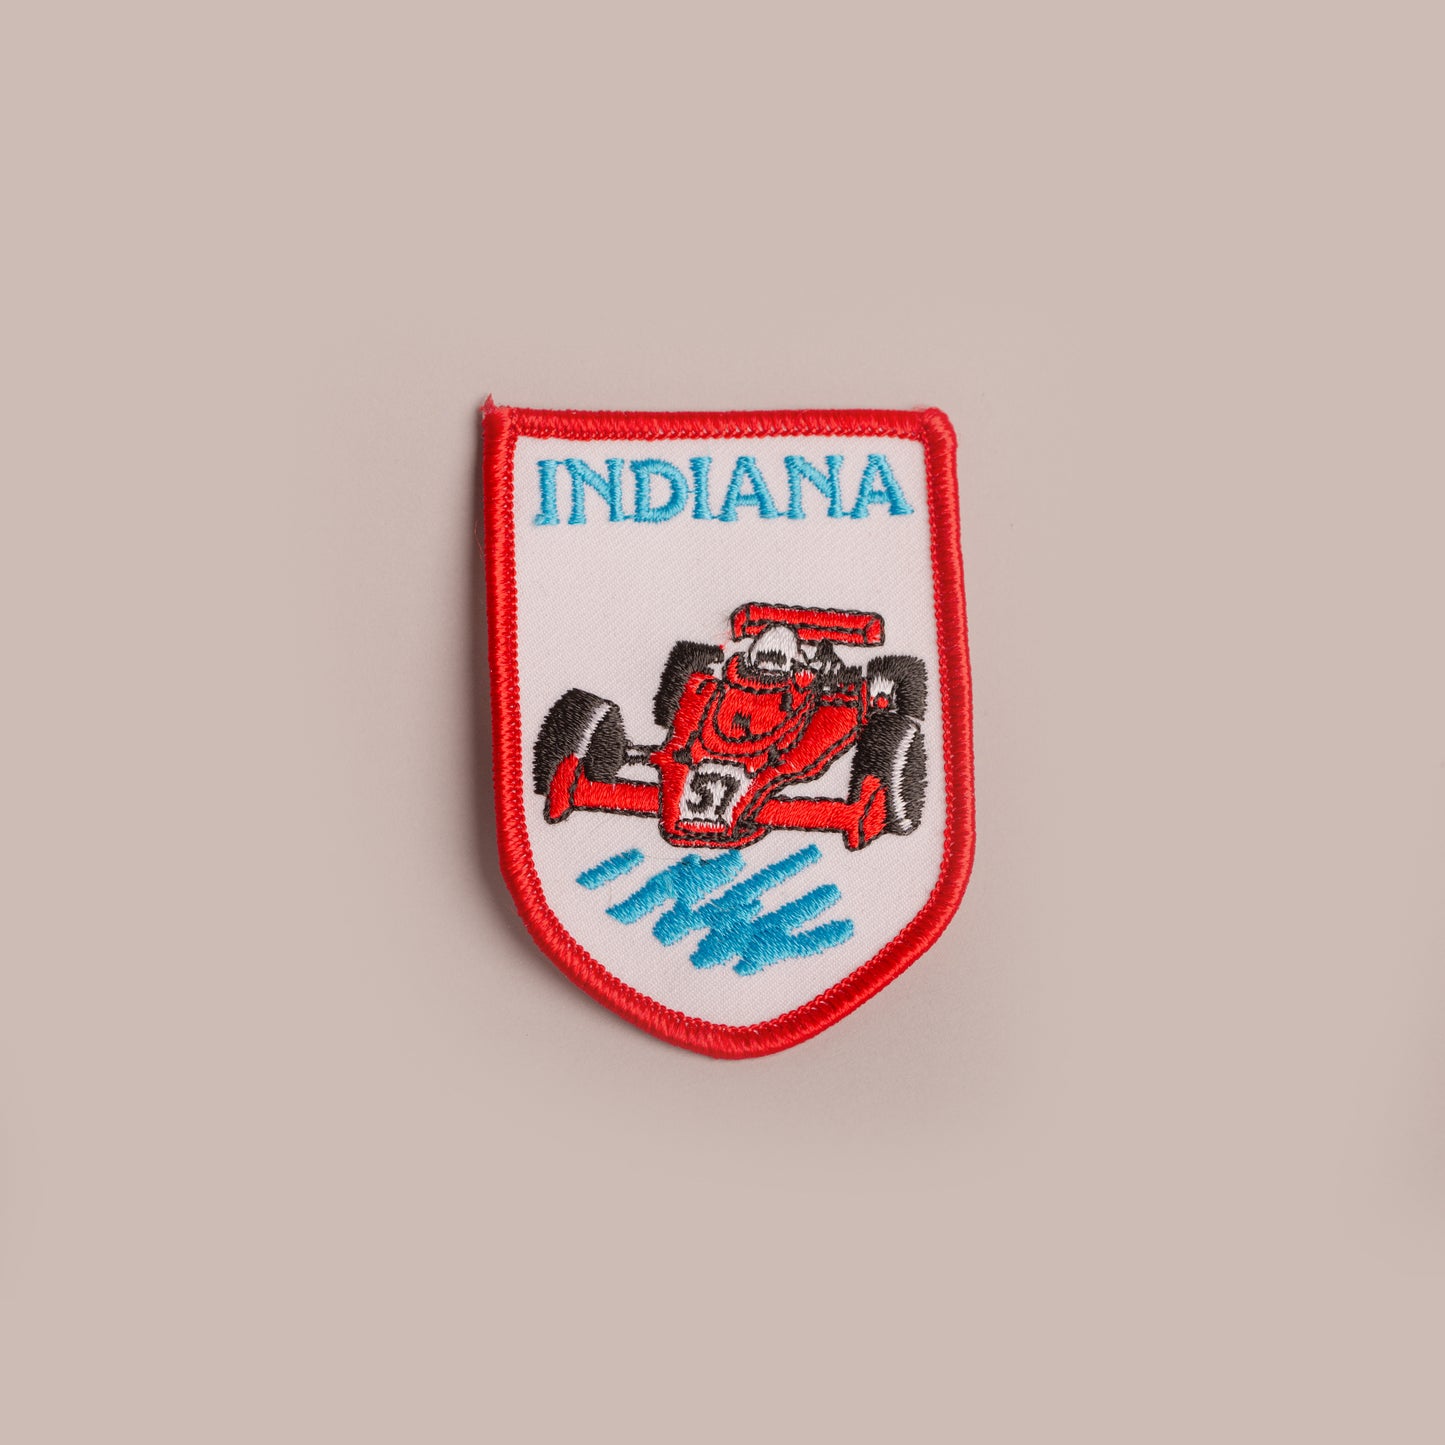 Vintage Patch - Indiana